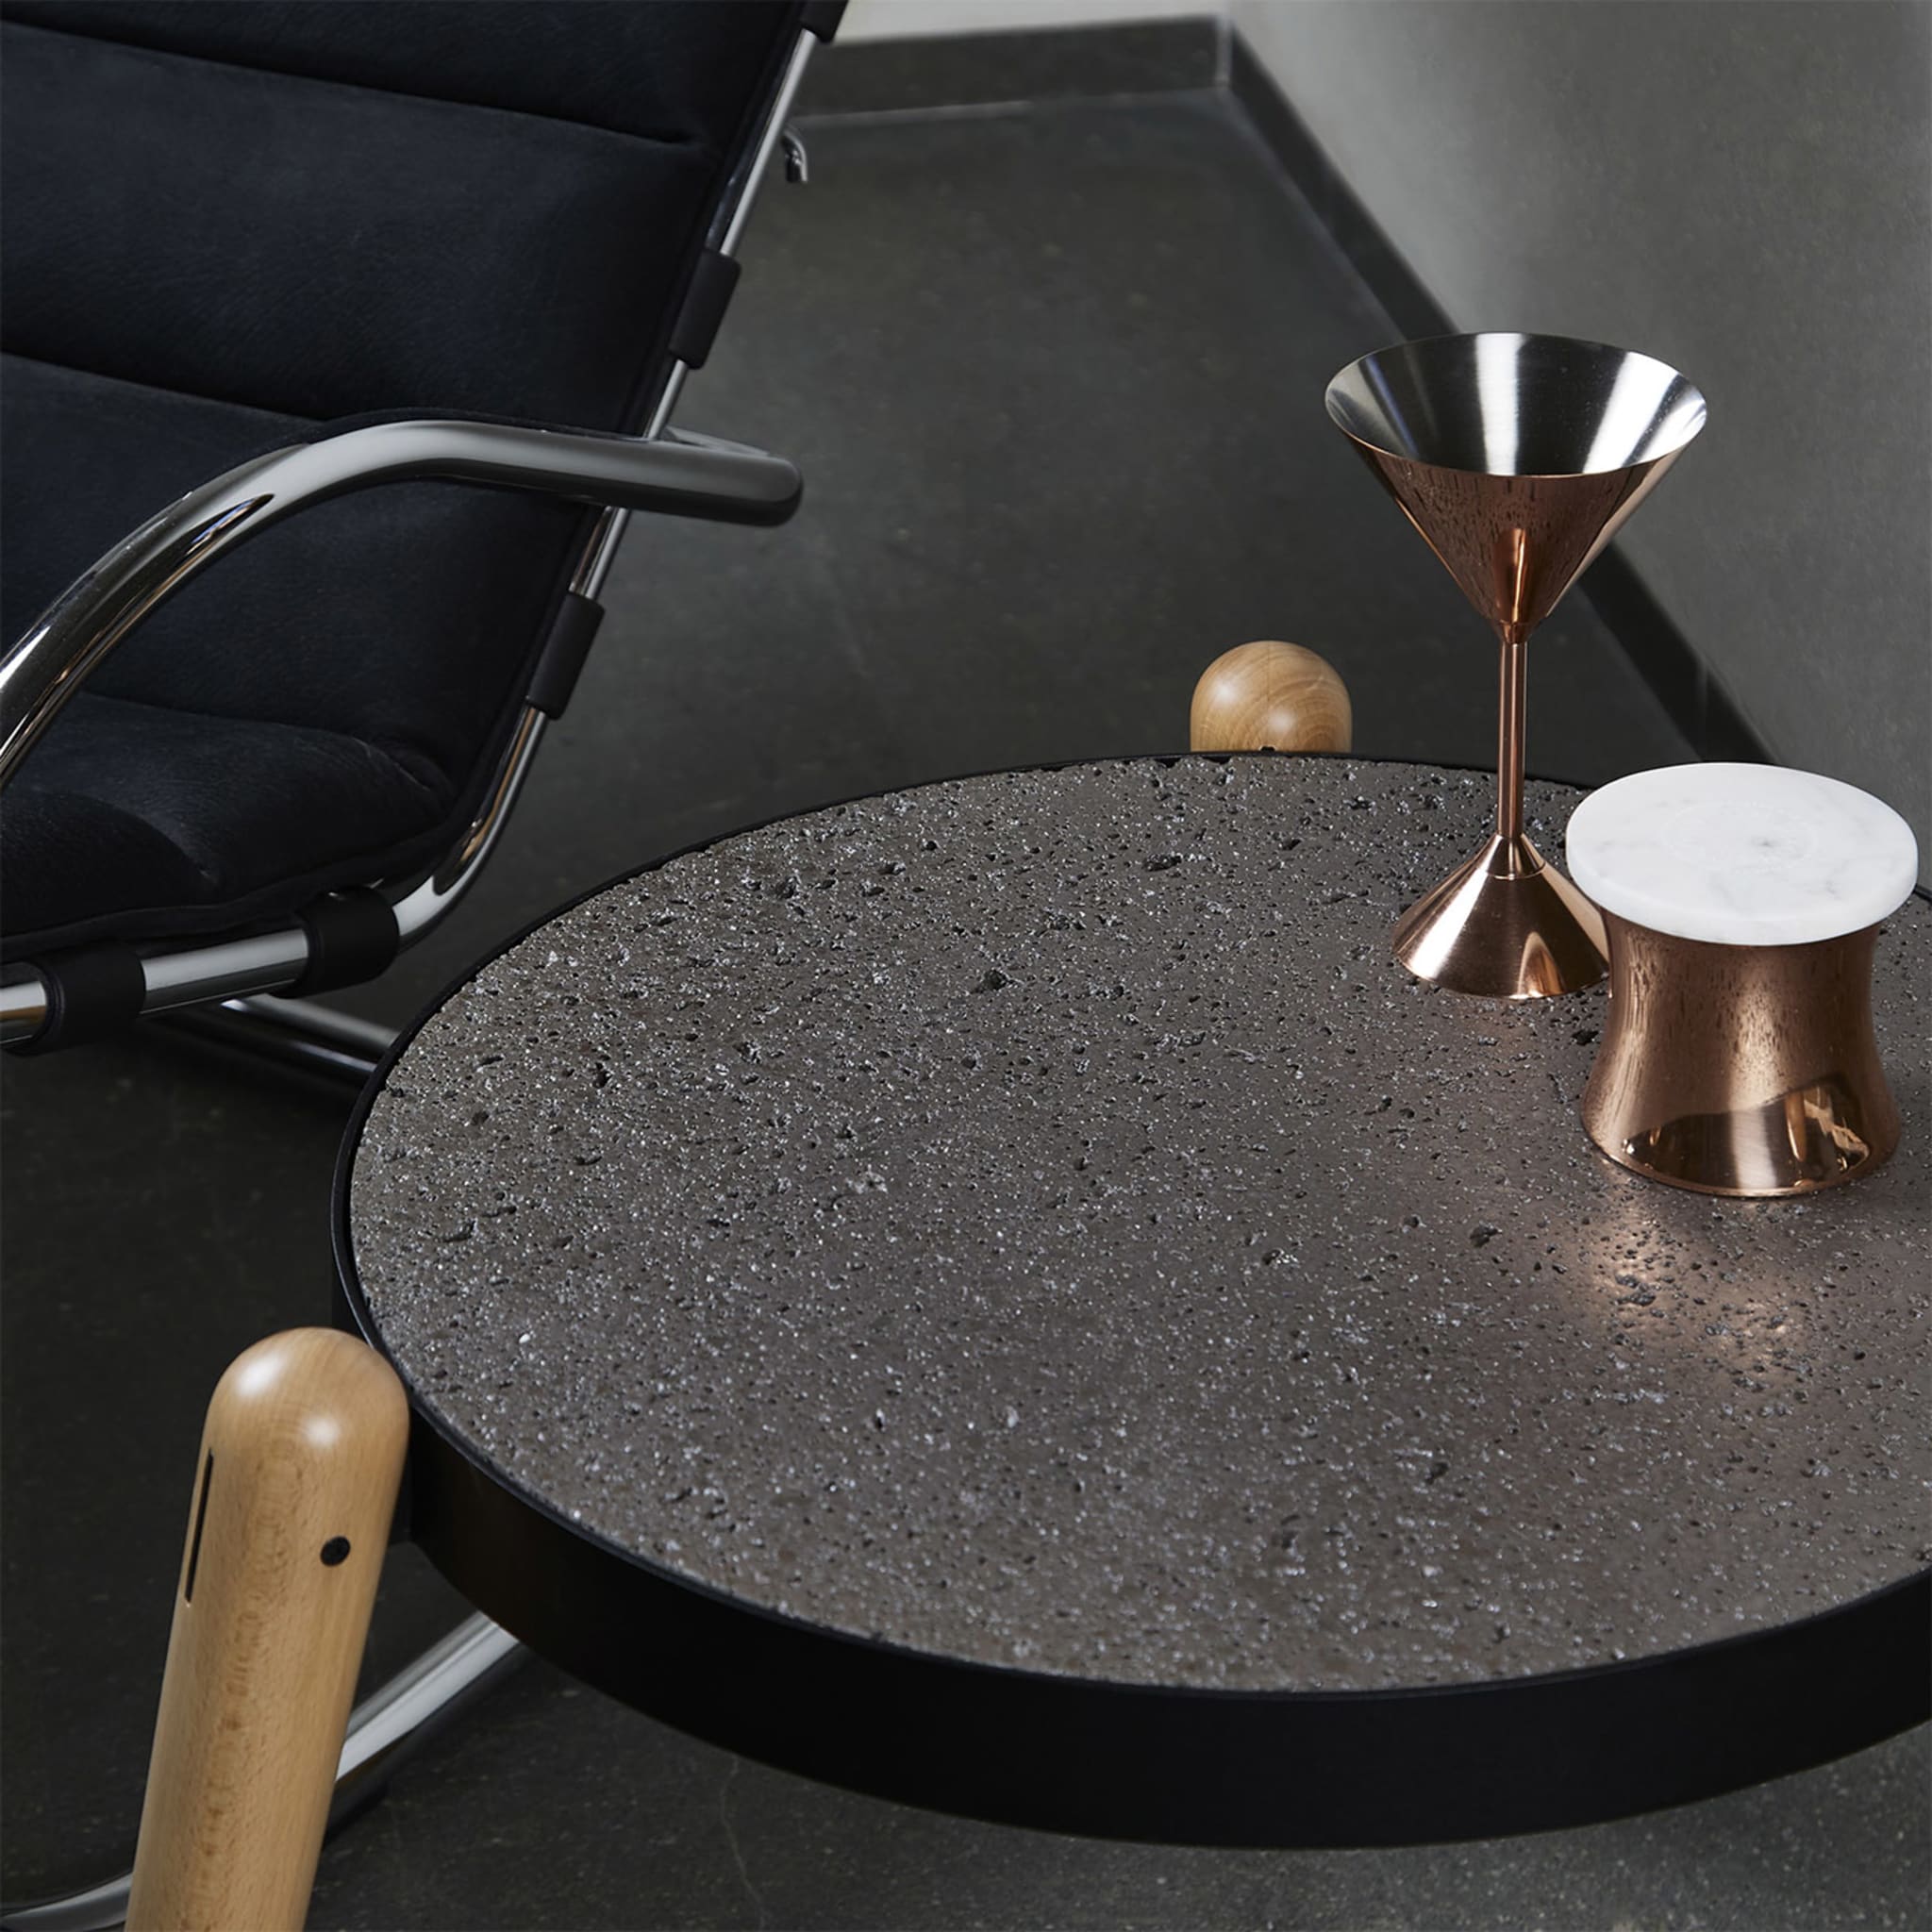 Tris Perciata Stone Round Coffee Table #4 by Luca Maci - Alternative view 3